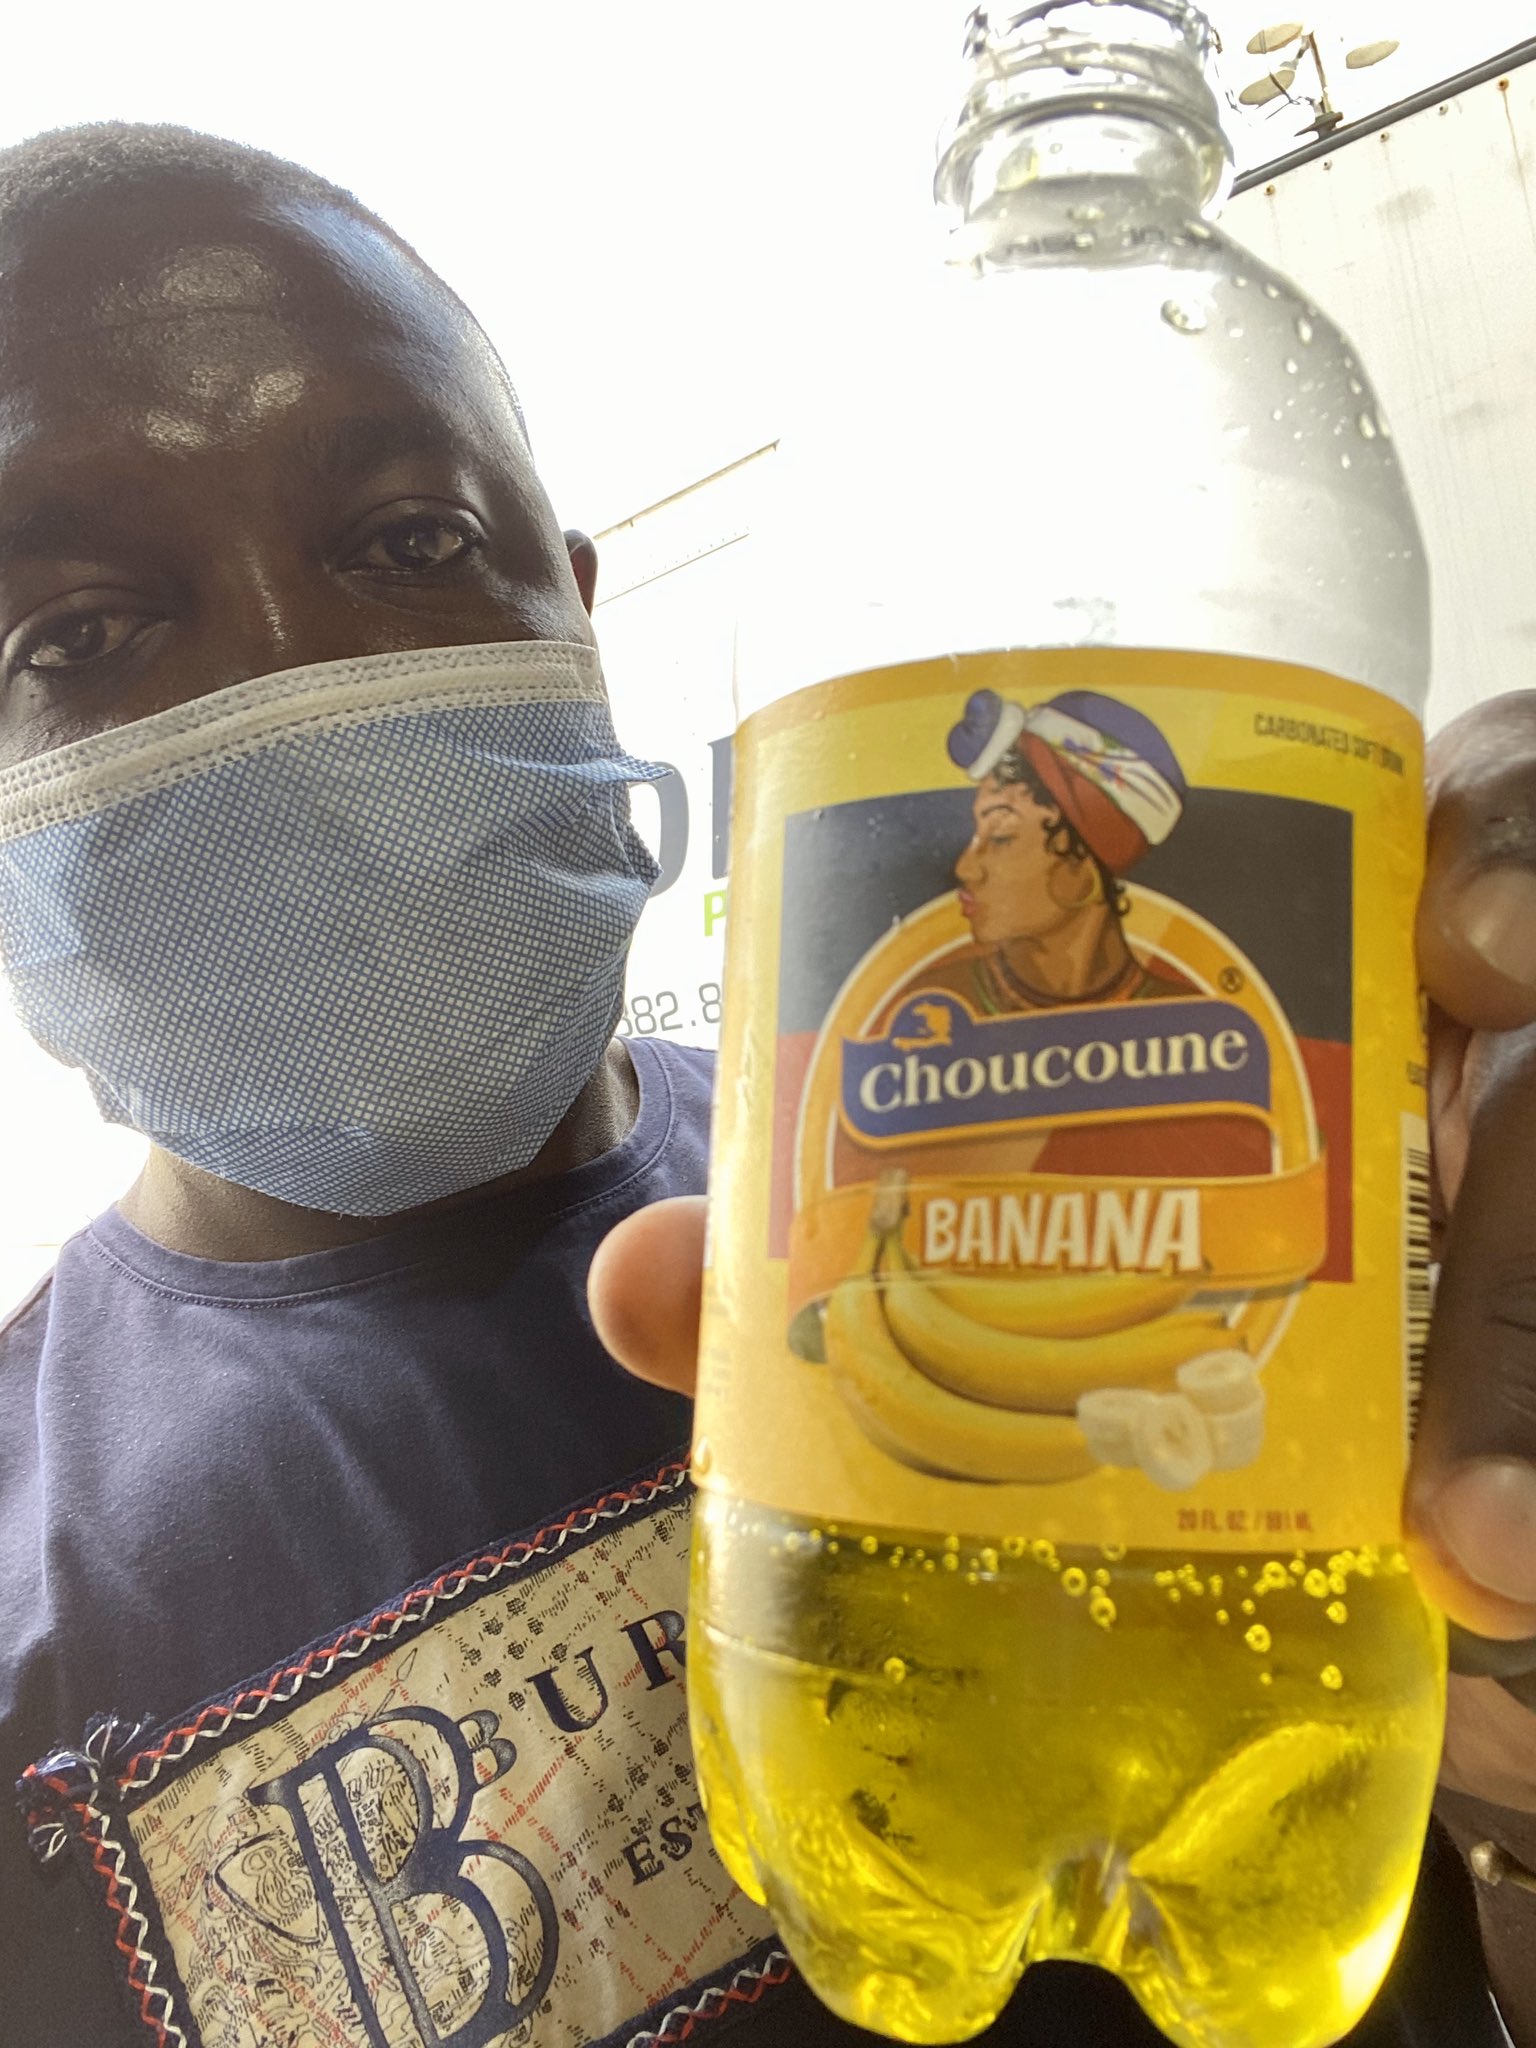 Jhonson Napoleon on Twitter: "Welcome back Kola Choucoune Cherie We missed  you in USA #choucoune #marabou #servicevsproduct #haiti #diaspora  https://t.co/6FfjWyv7OP" / Twitter